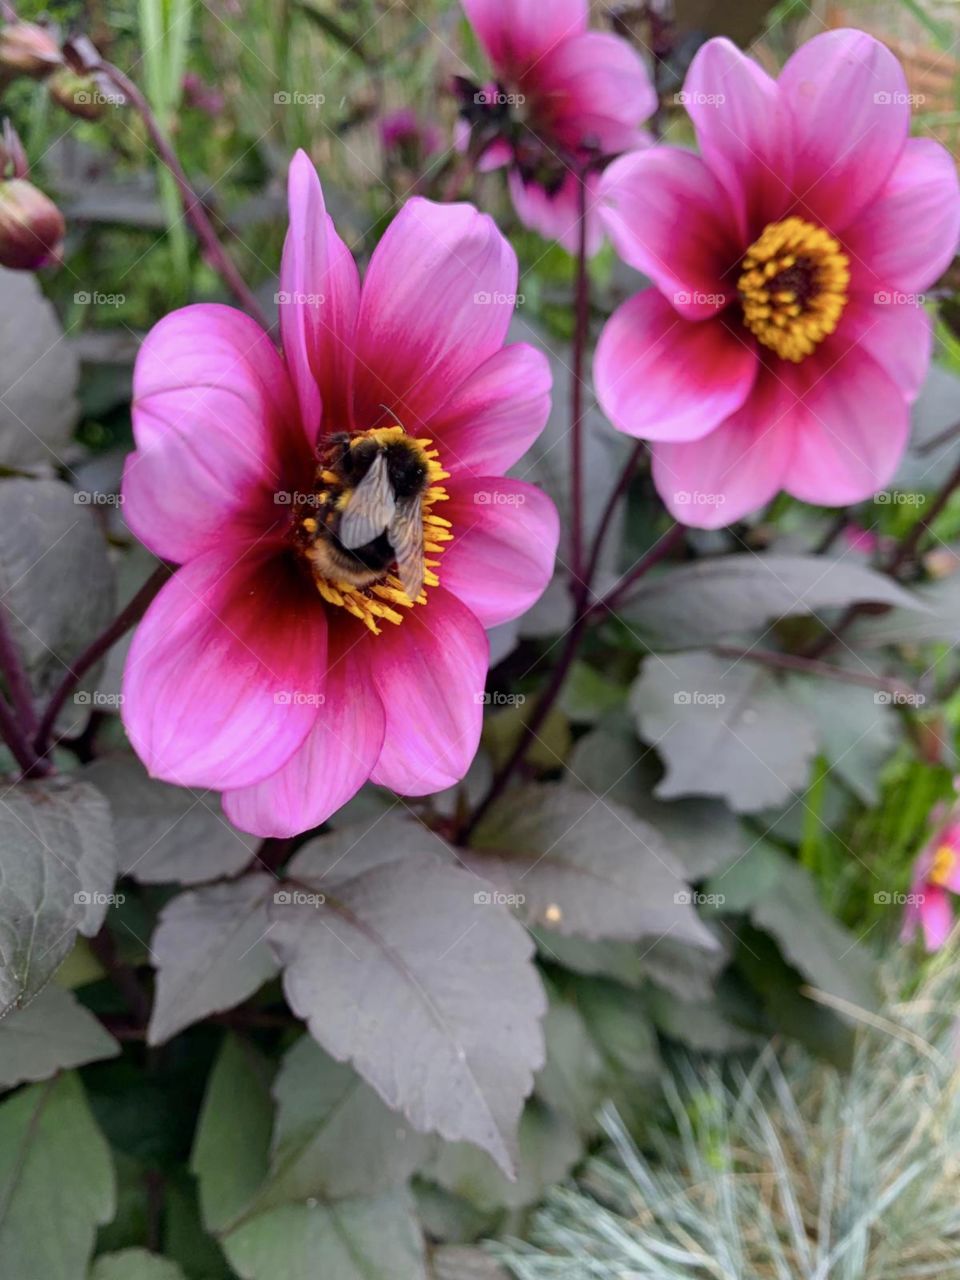 Bumble bee 🐝